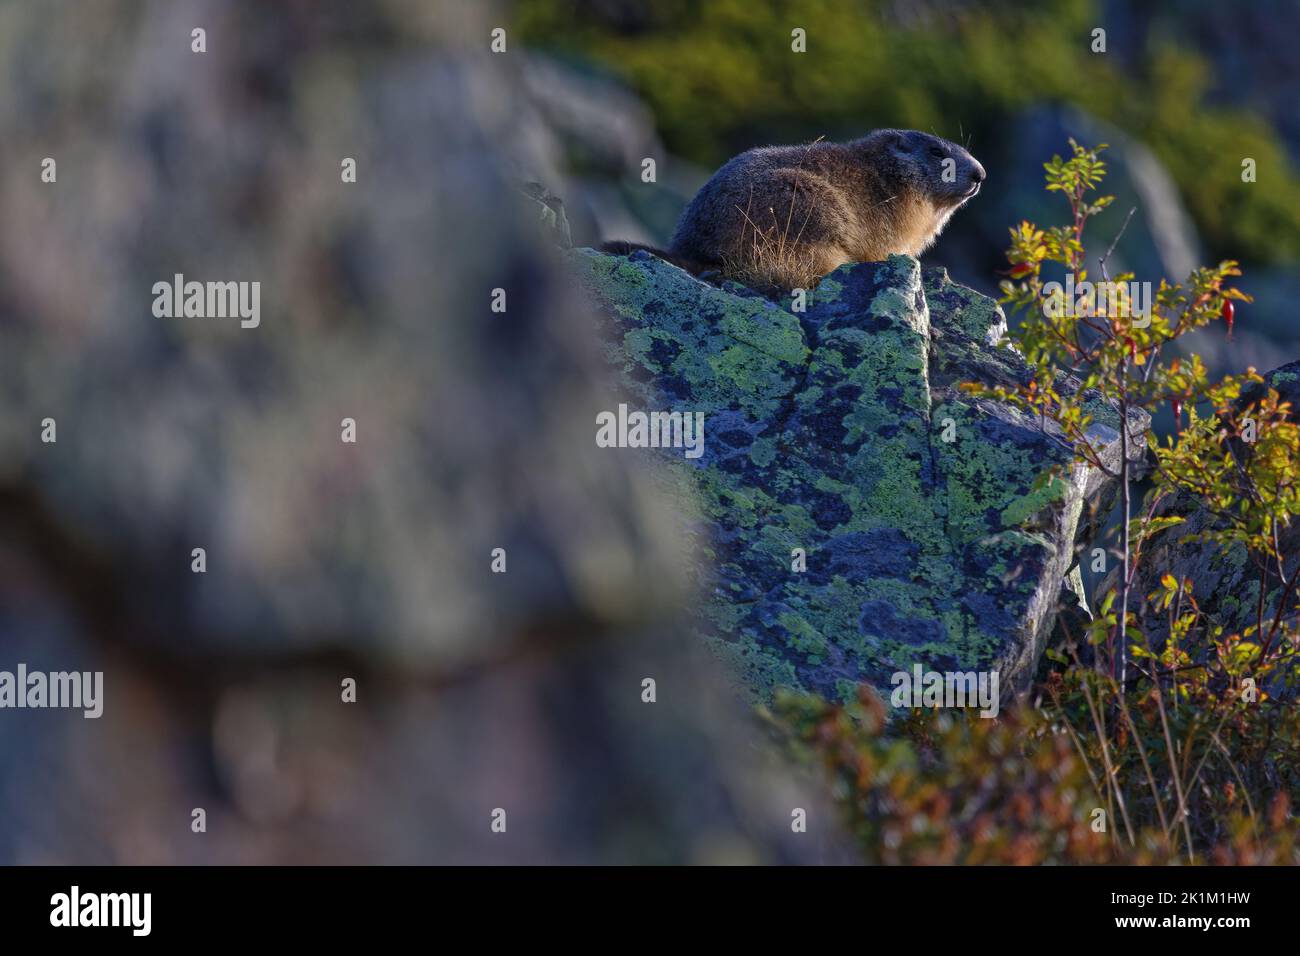 A hidden groundhog in vegetation and rocks Stock Photo